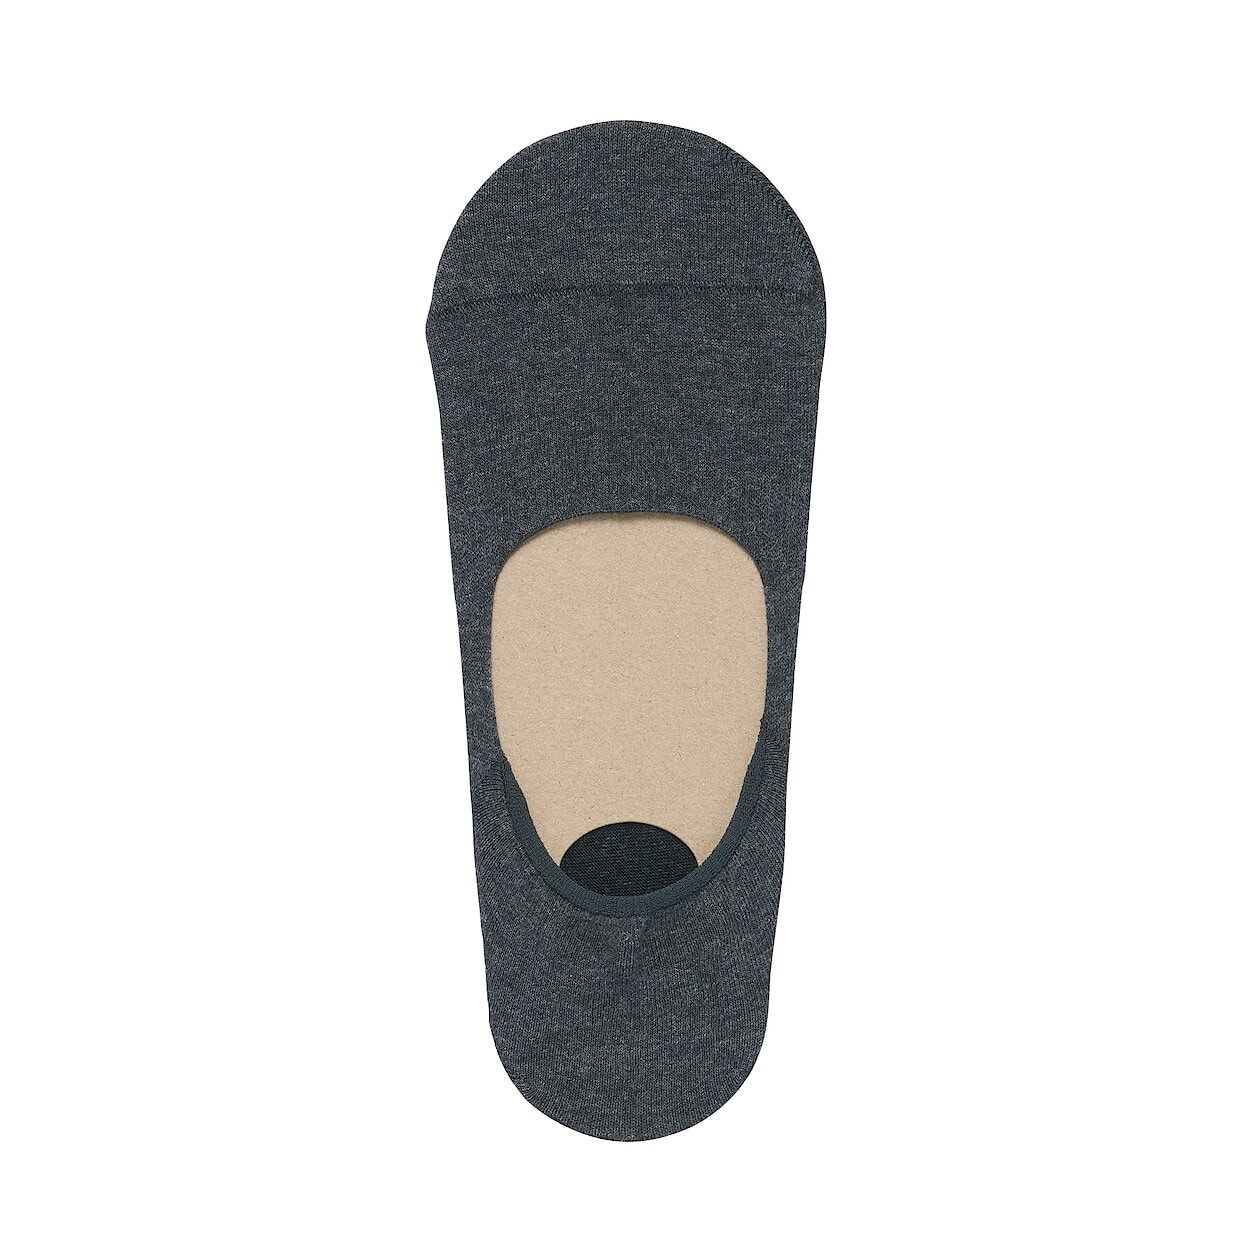 No-Slip Heel Thin Foot Cover